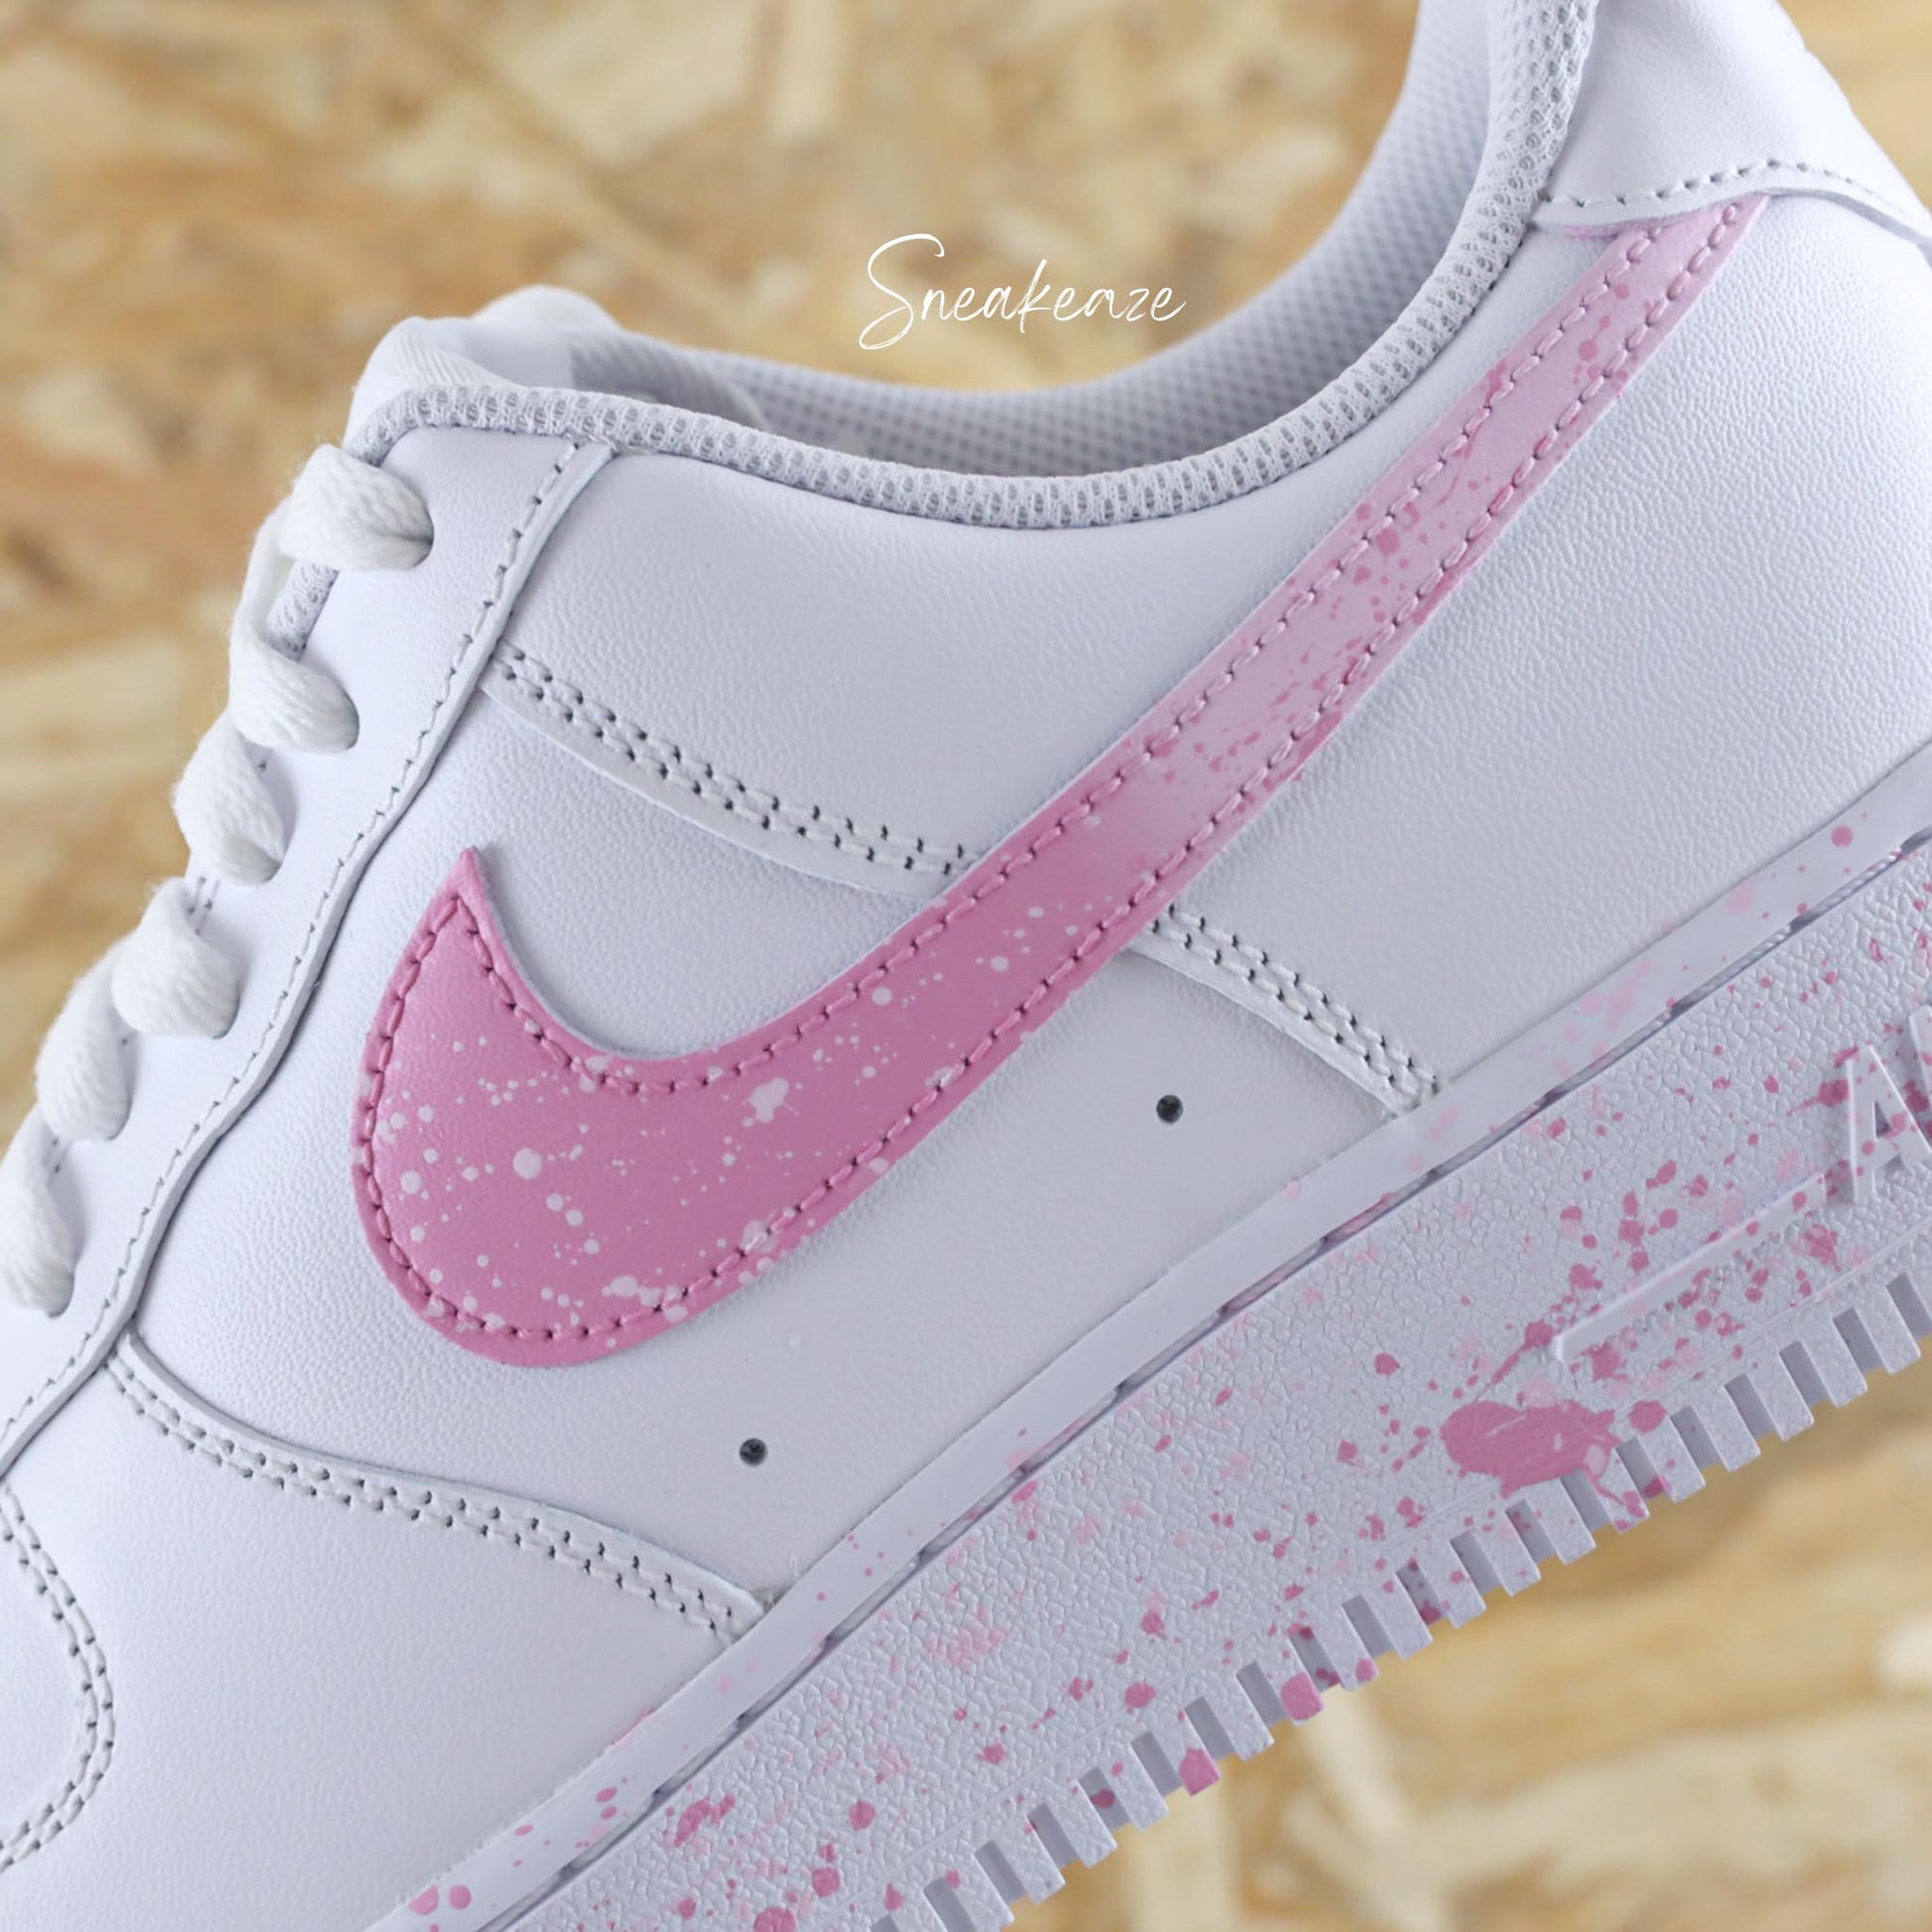 baskets nike air force 1 custom splash dégradé rose baby pink sneakers af1 sneakeaze